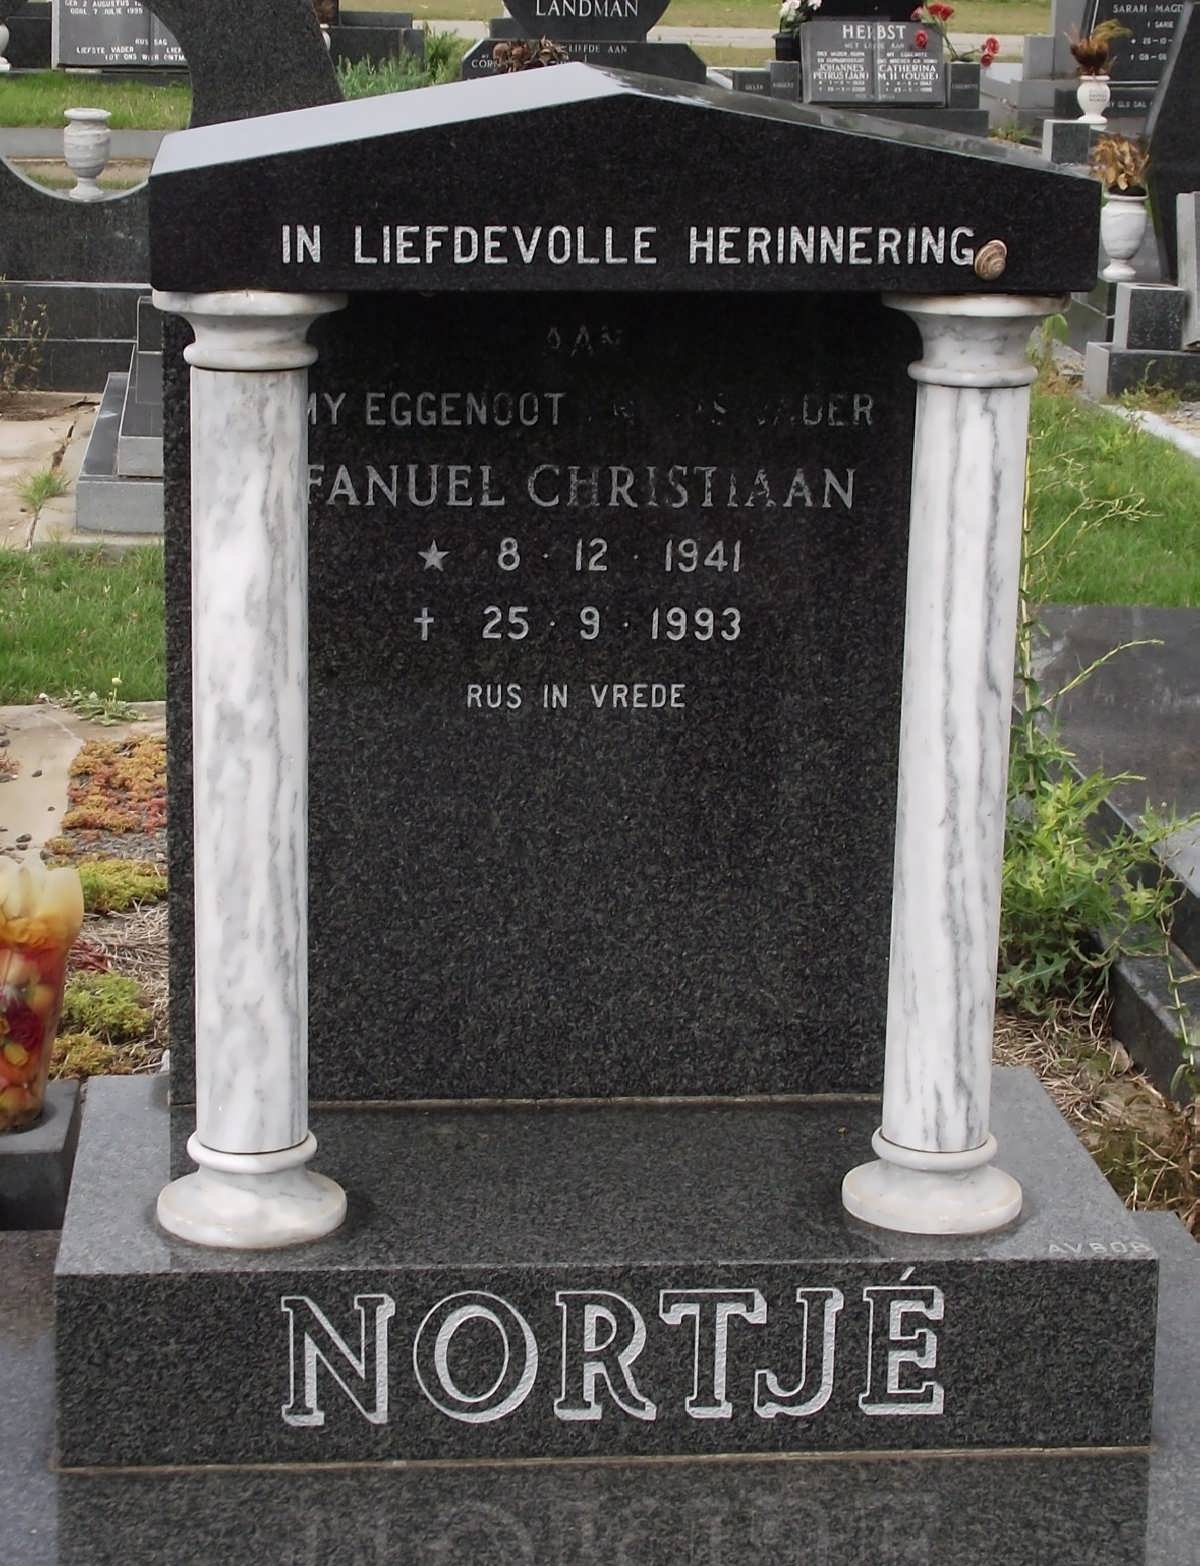 NORTJE Fanuel Christiaan 1941-1993